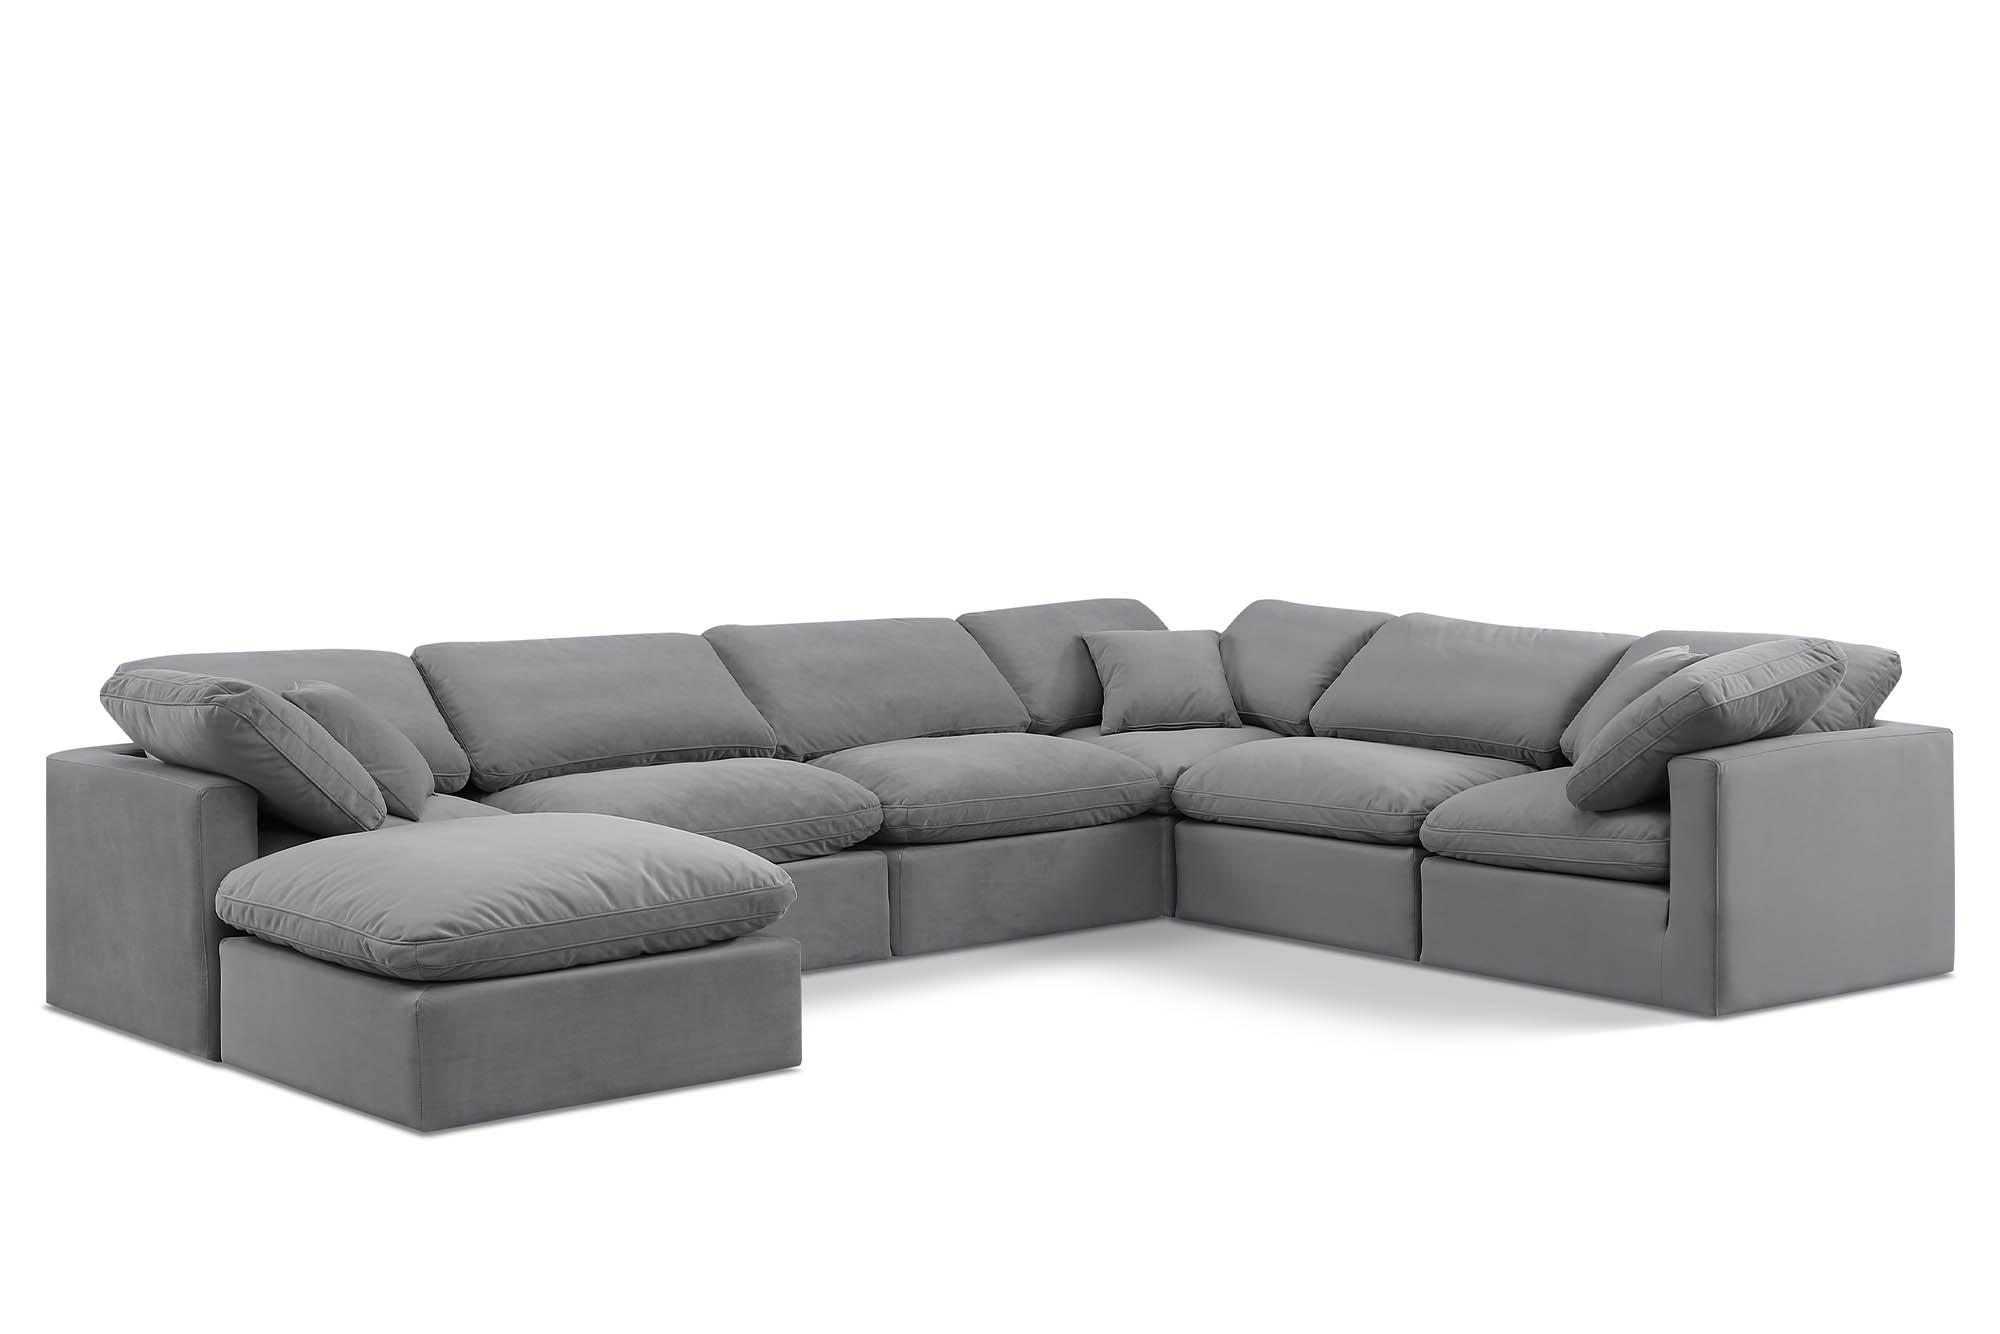 Contemporary, Modern Modular Sectional Sofa INDULGE 147Grey-Sec7A 147Grey-Sec7A in Gray Velvet